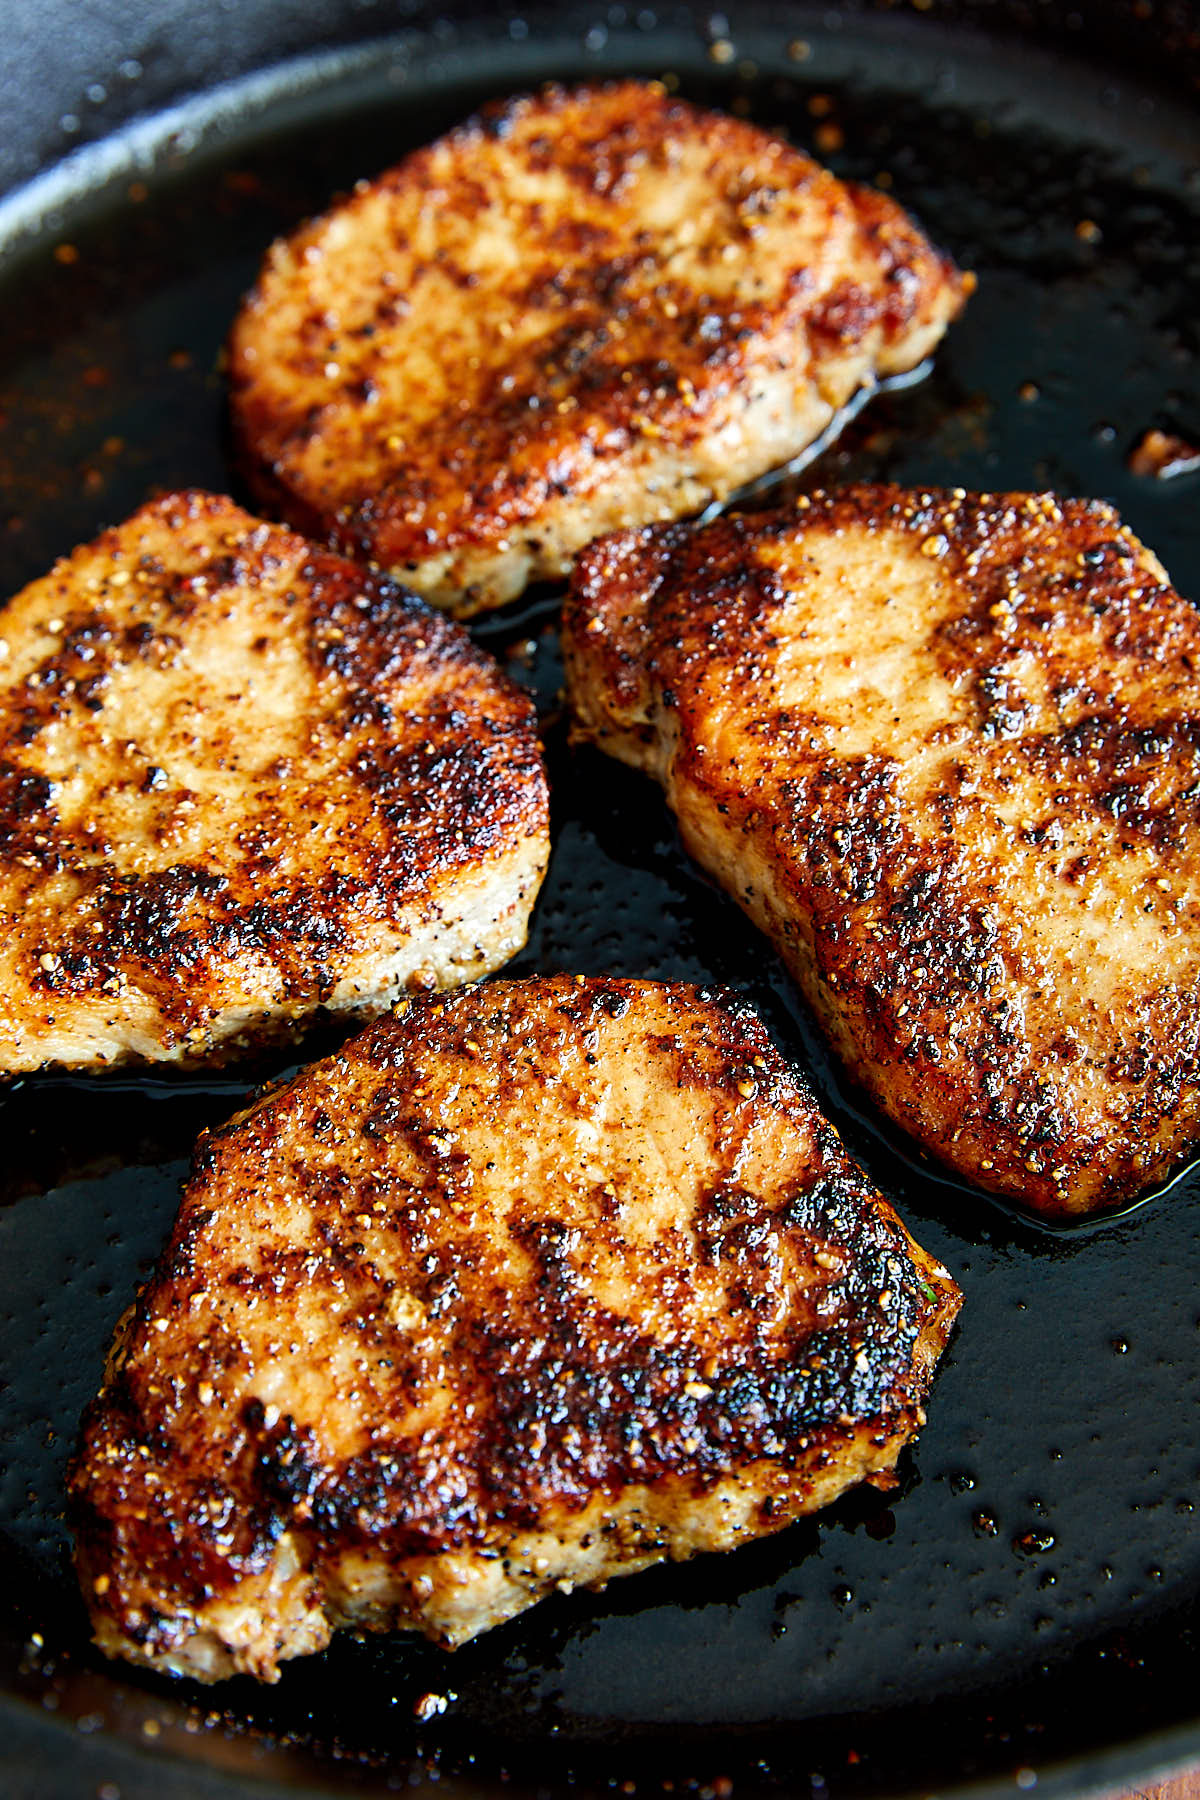 pan fried boneless pork chops